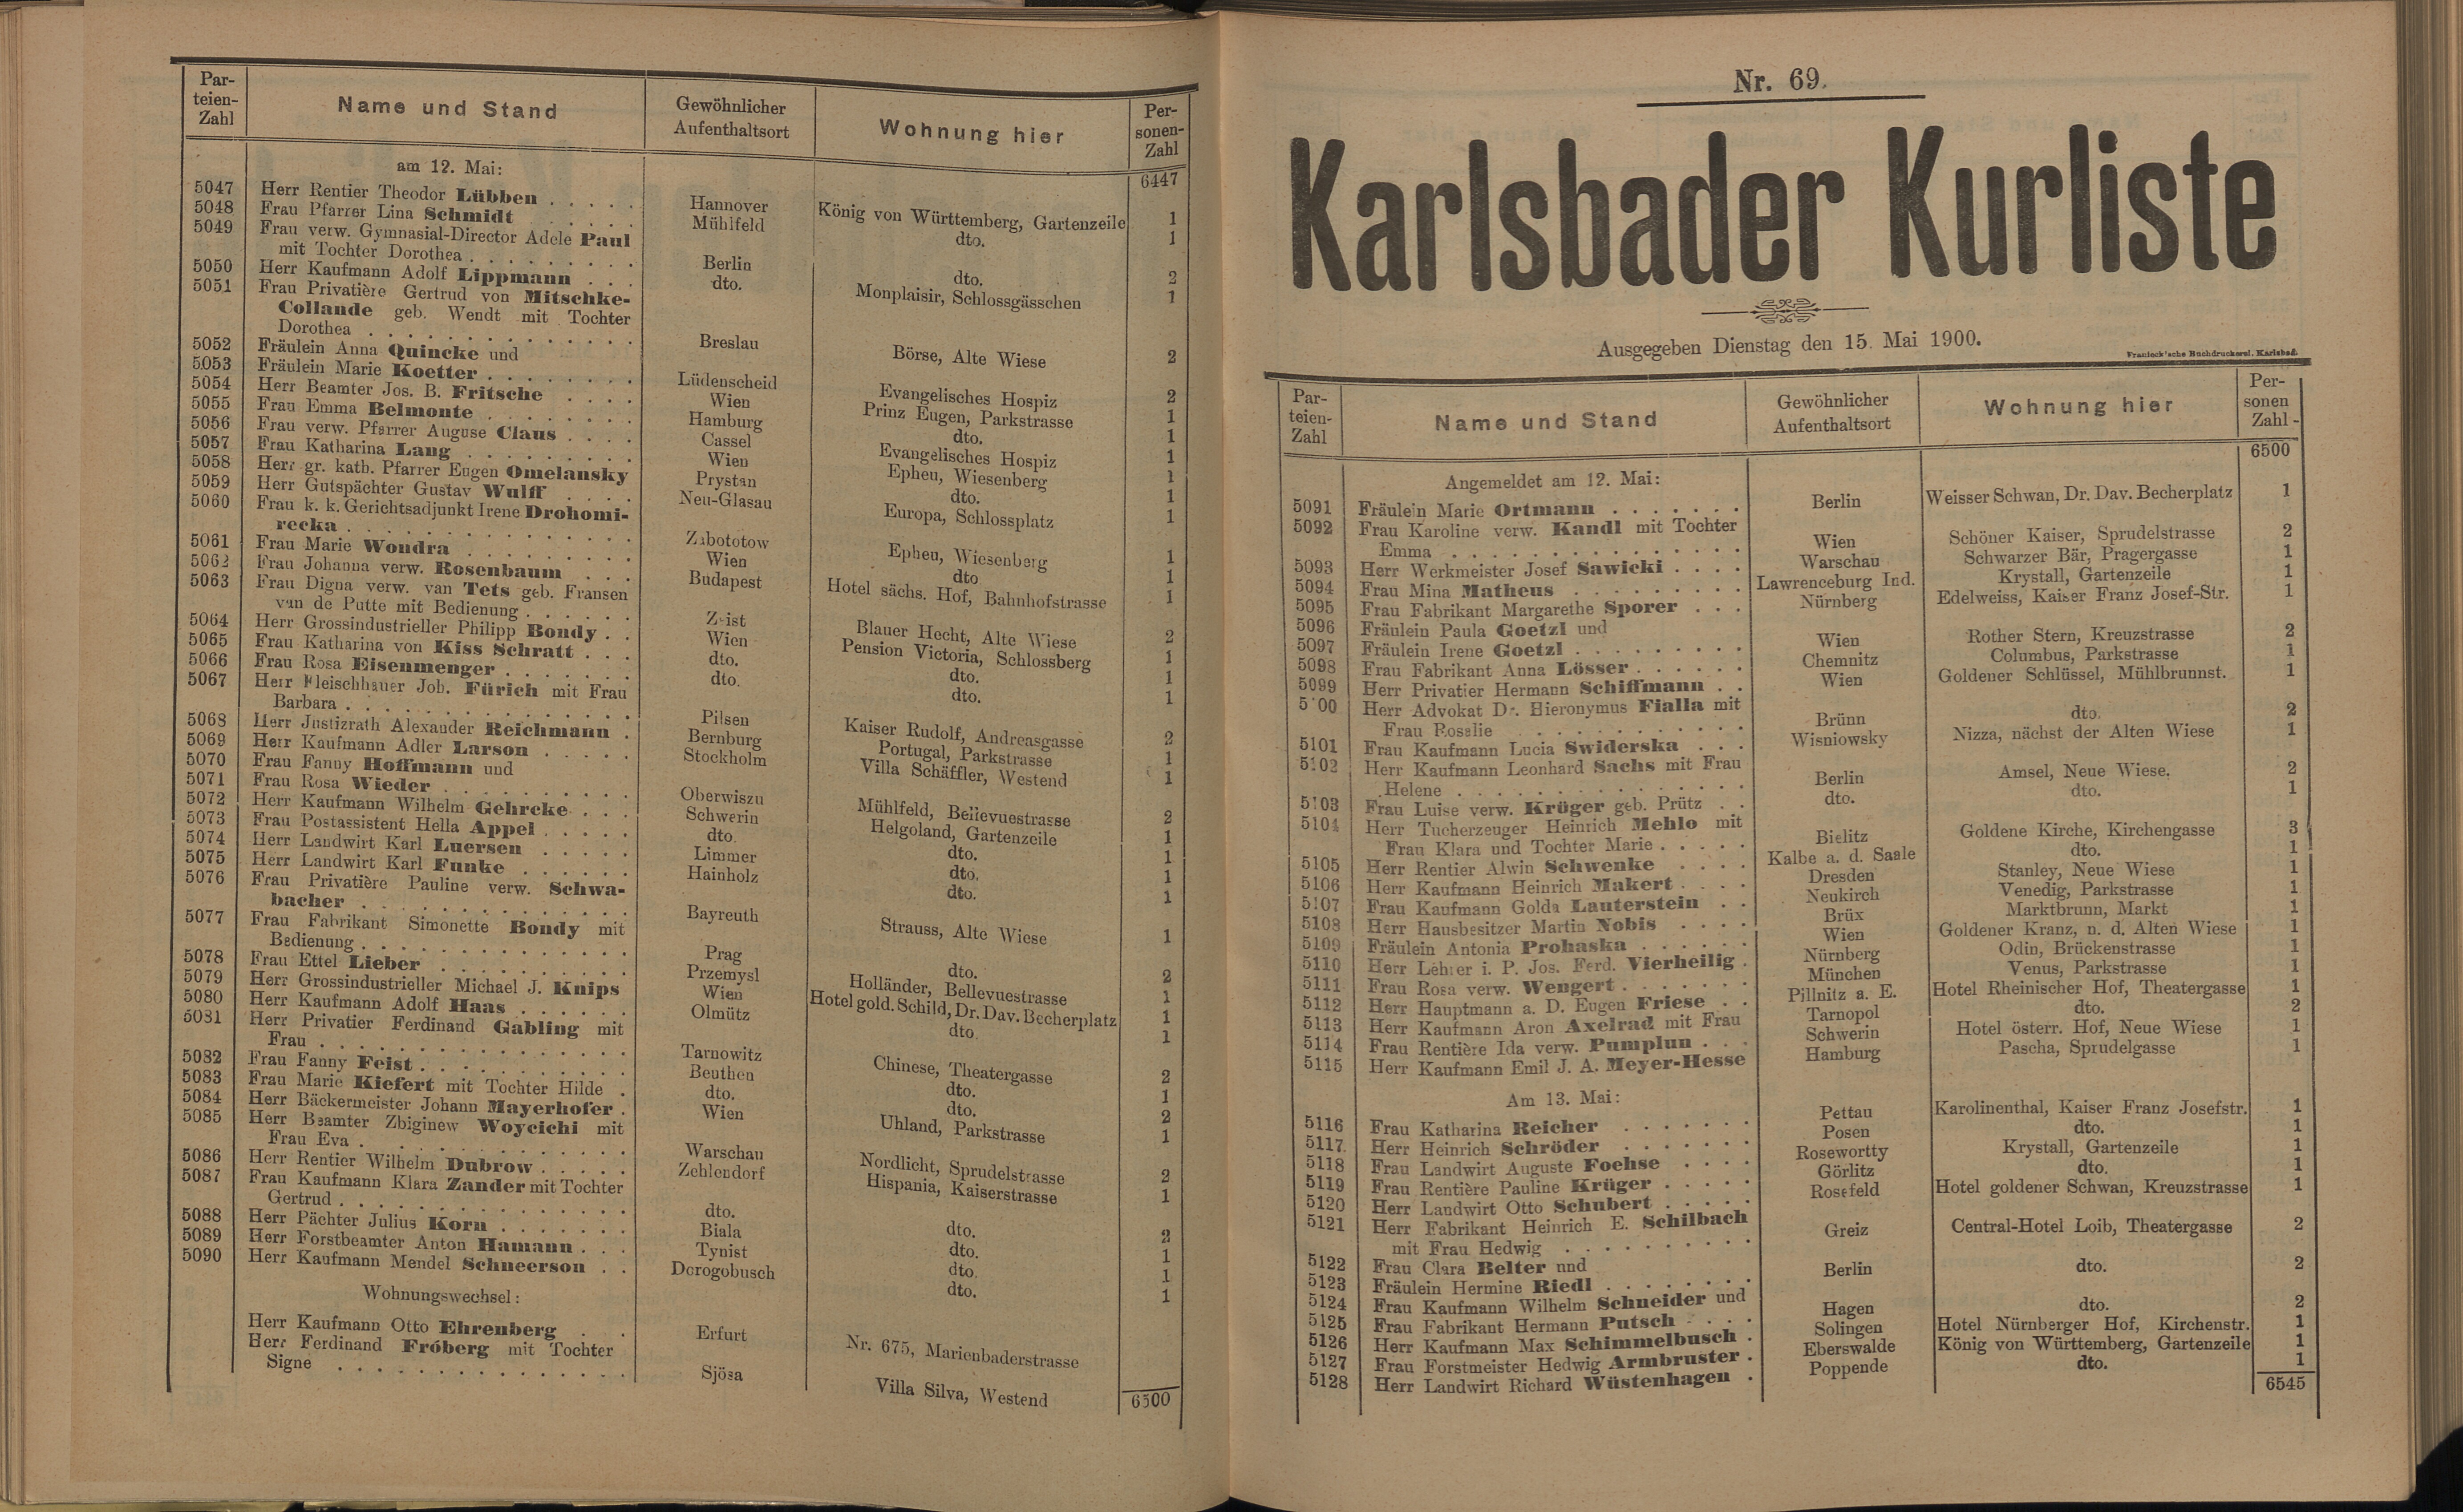 89. soap-kv_knihovna_karlsbader-kurliste-1900_0900